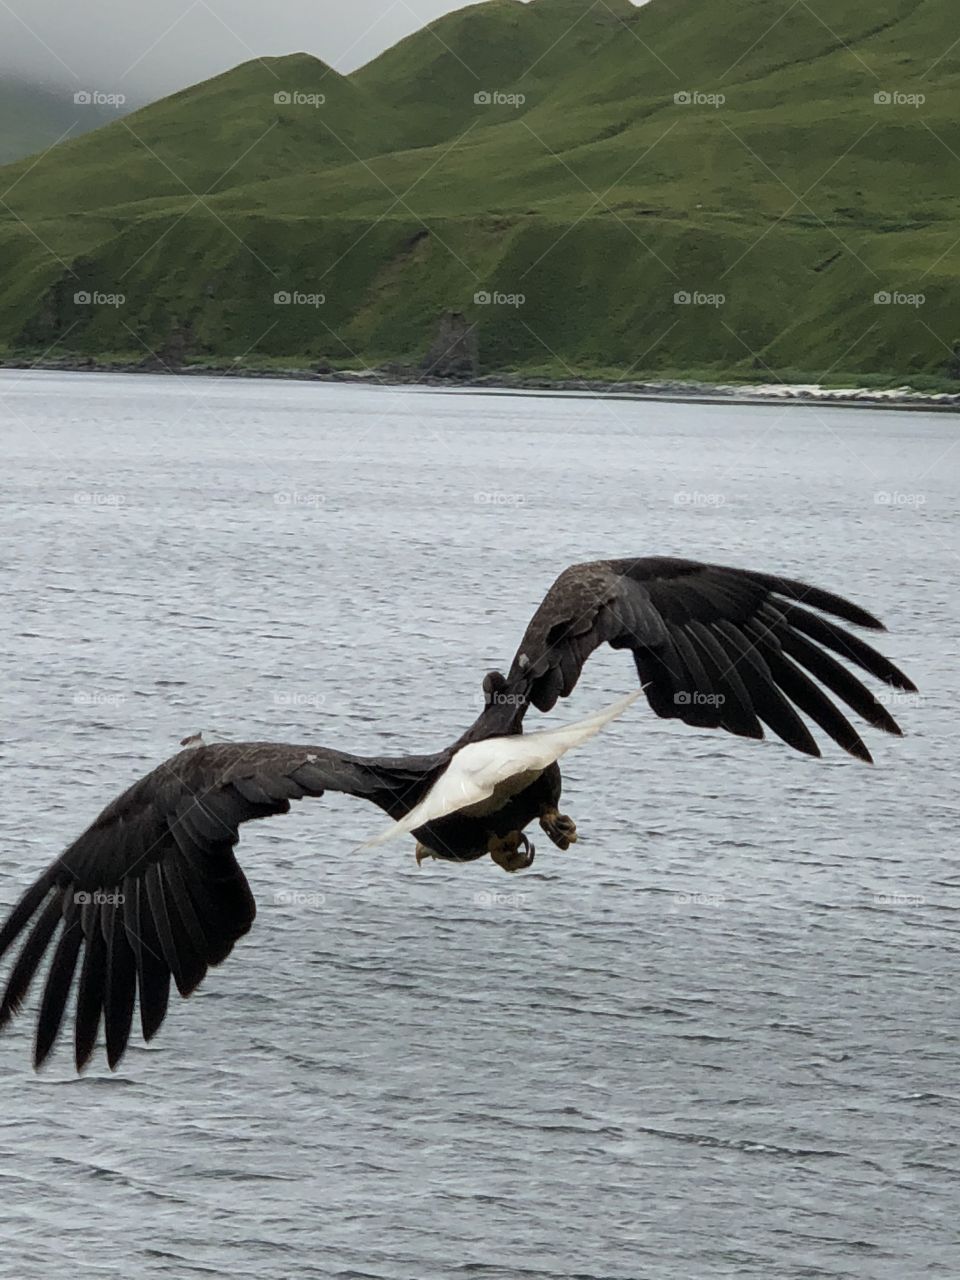 Bald eagle taking off in Alaska 